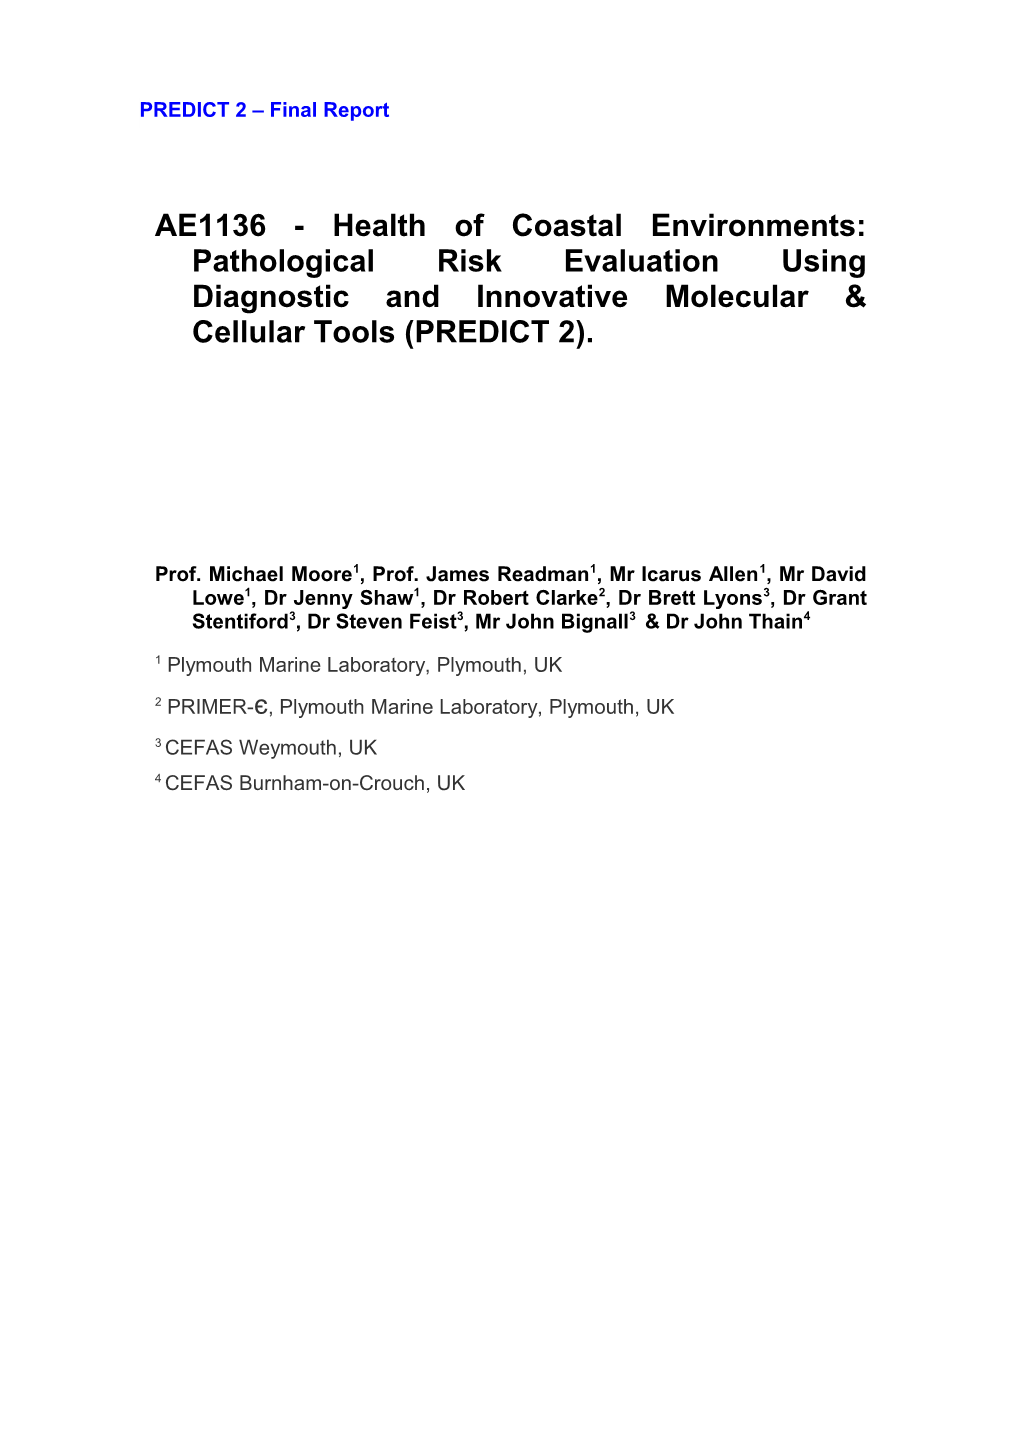 AE1136 - Health of Coastal Environments: Pathological Risk Evaluation Using Diagnostic